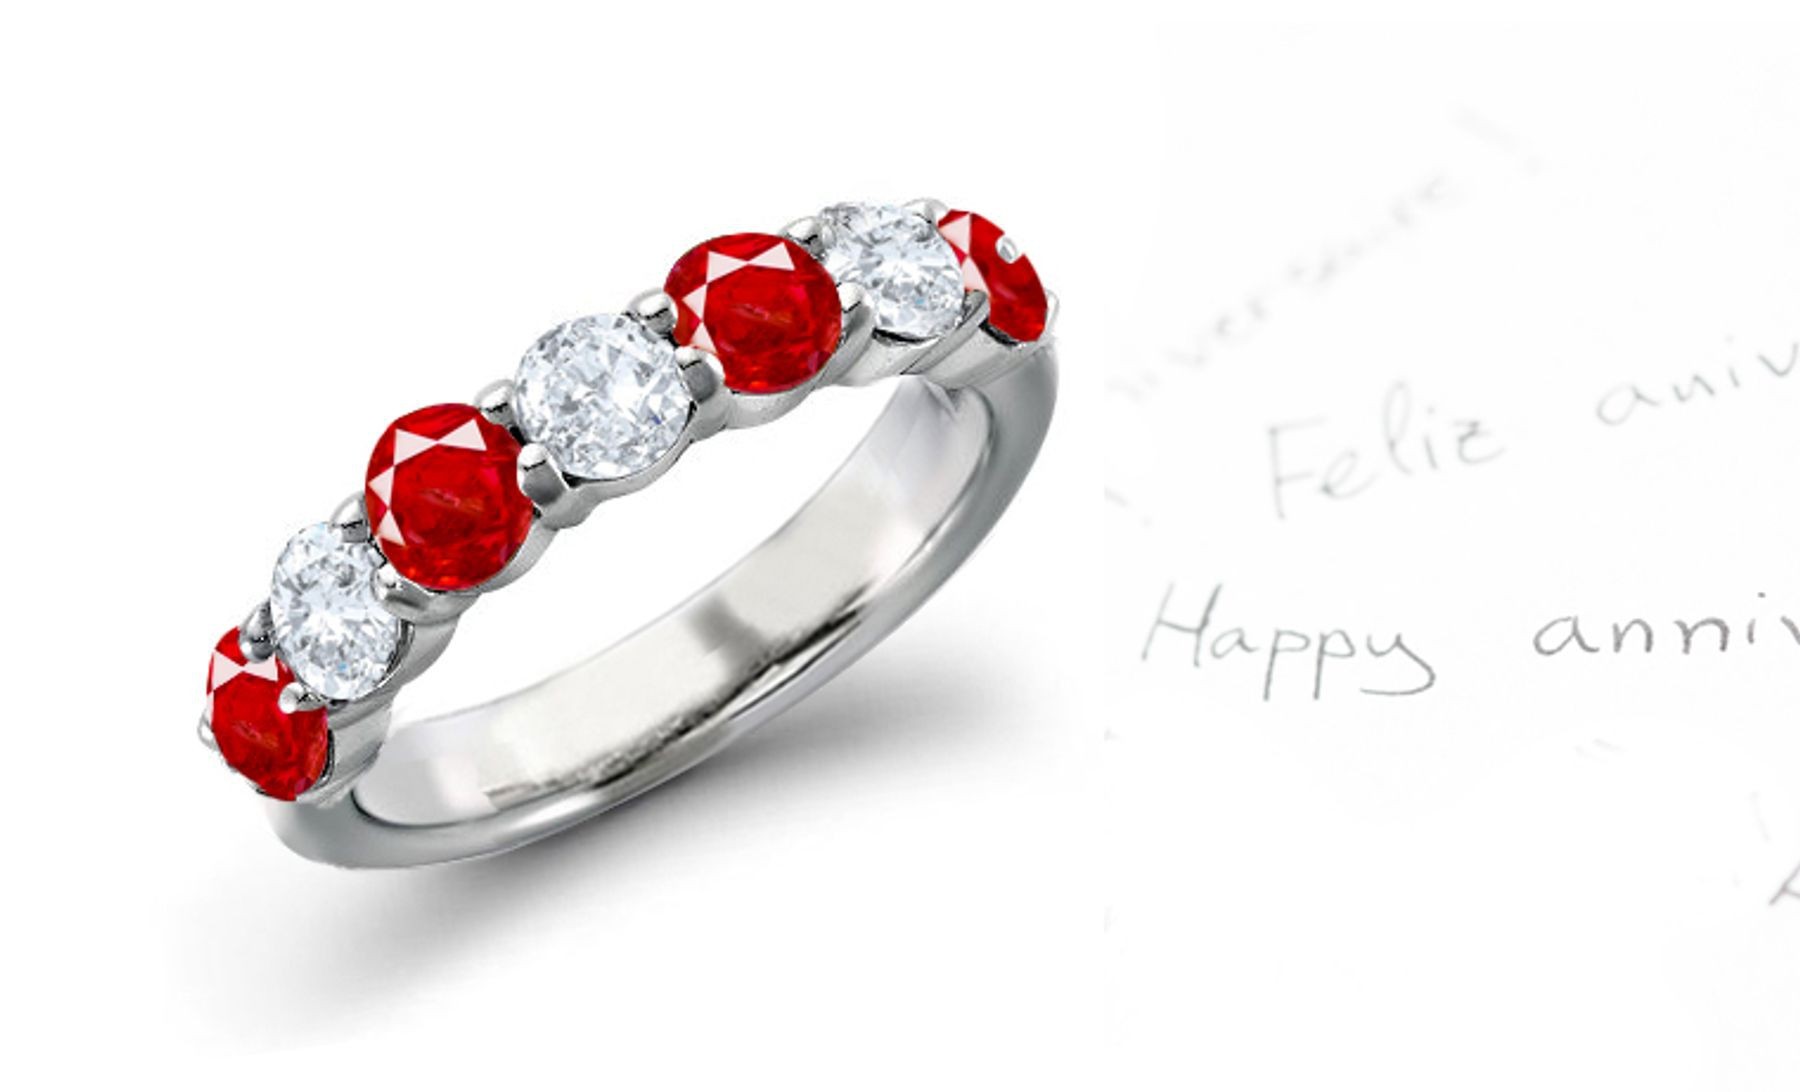 Anniversary Wedding Rings: Ruby diamond ring in platinum set with four round rubies and three round diamonds.